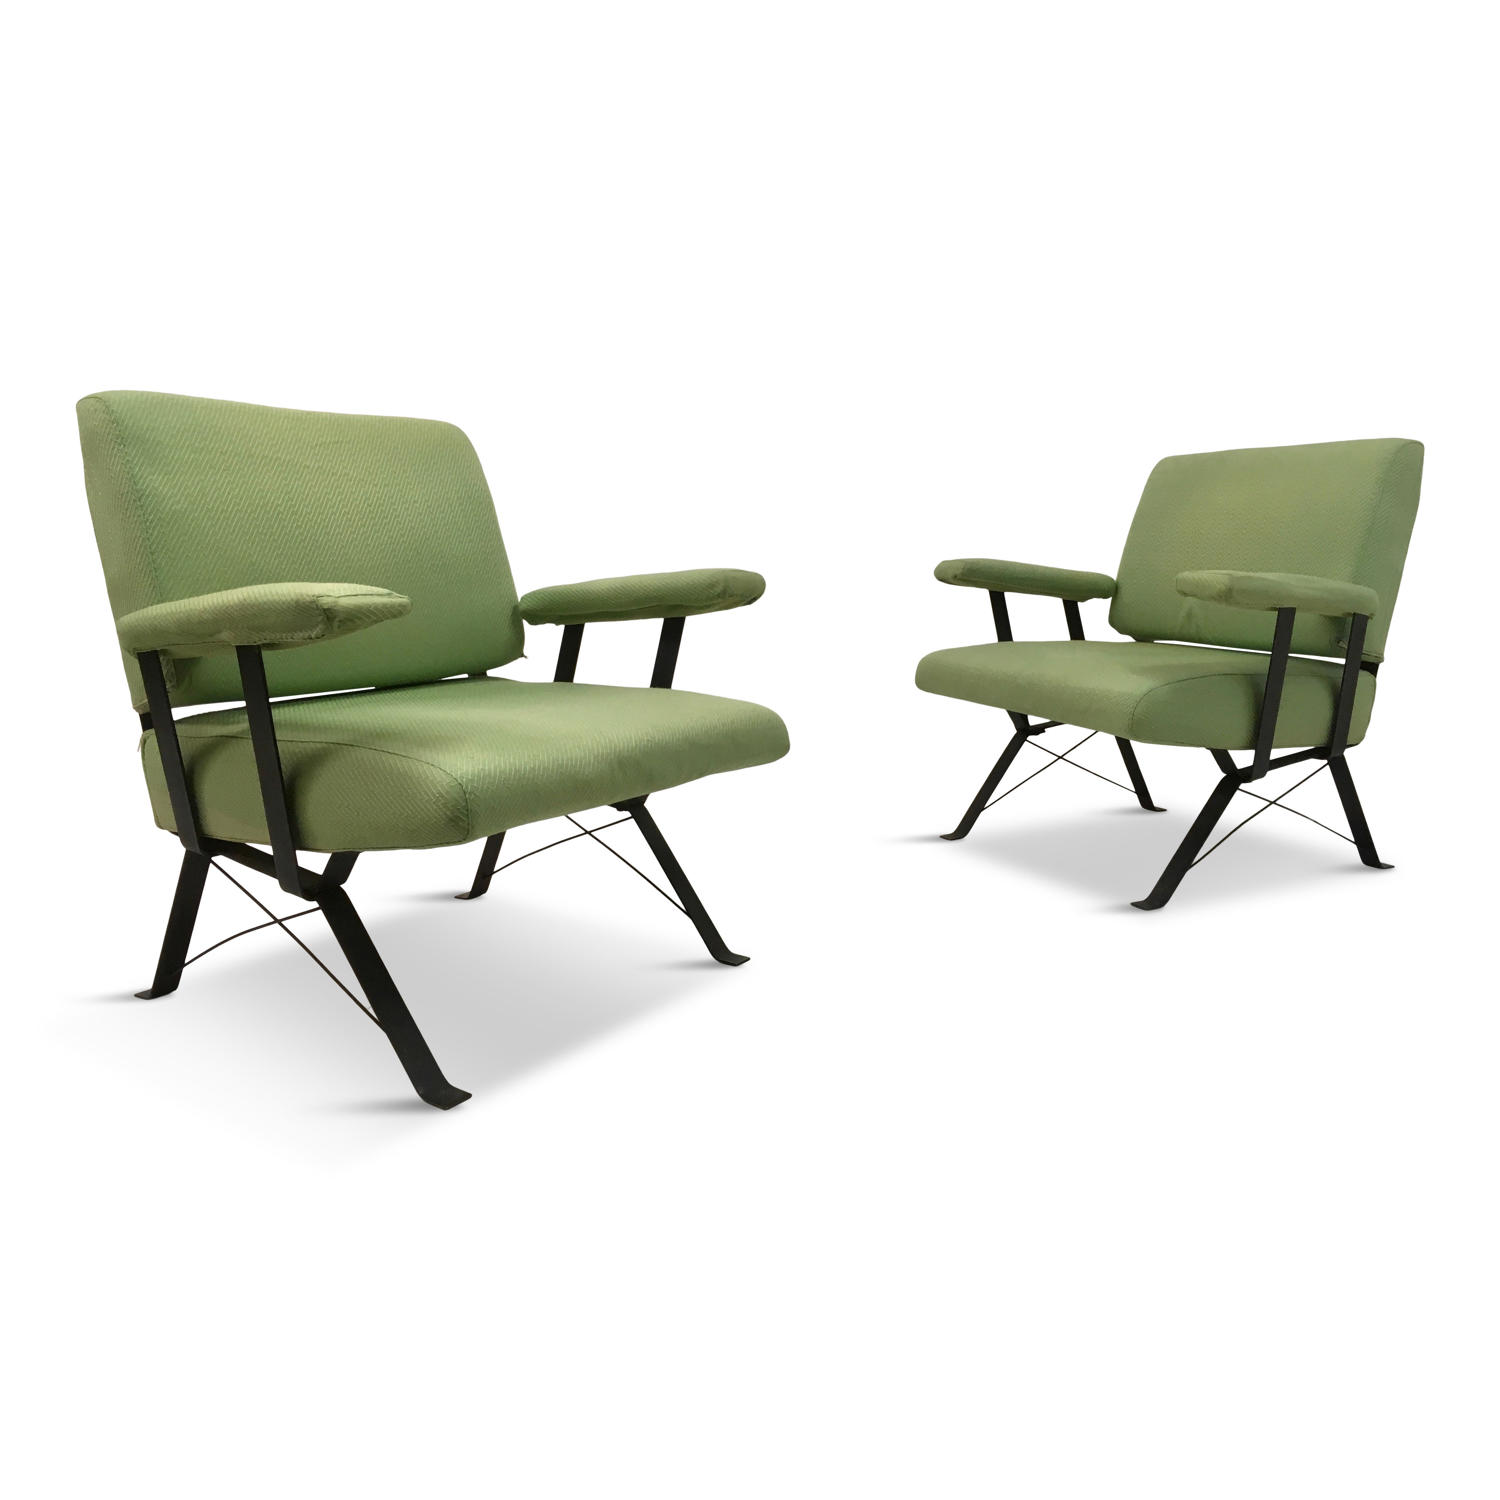 A pair of 1960s Italian steel armchairs